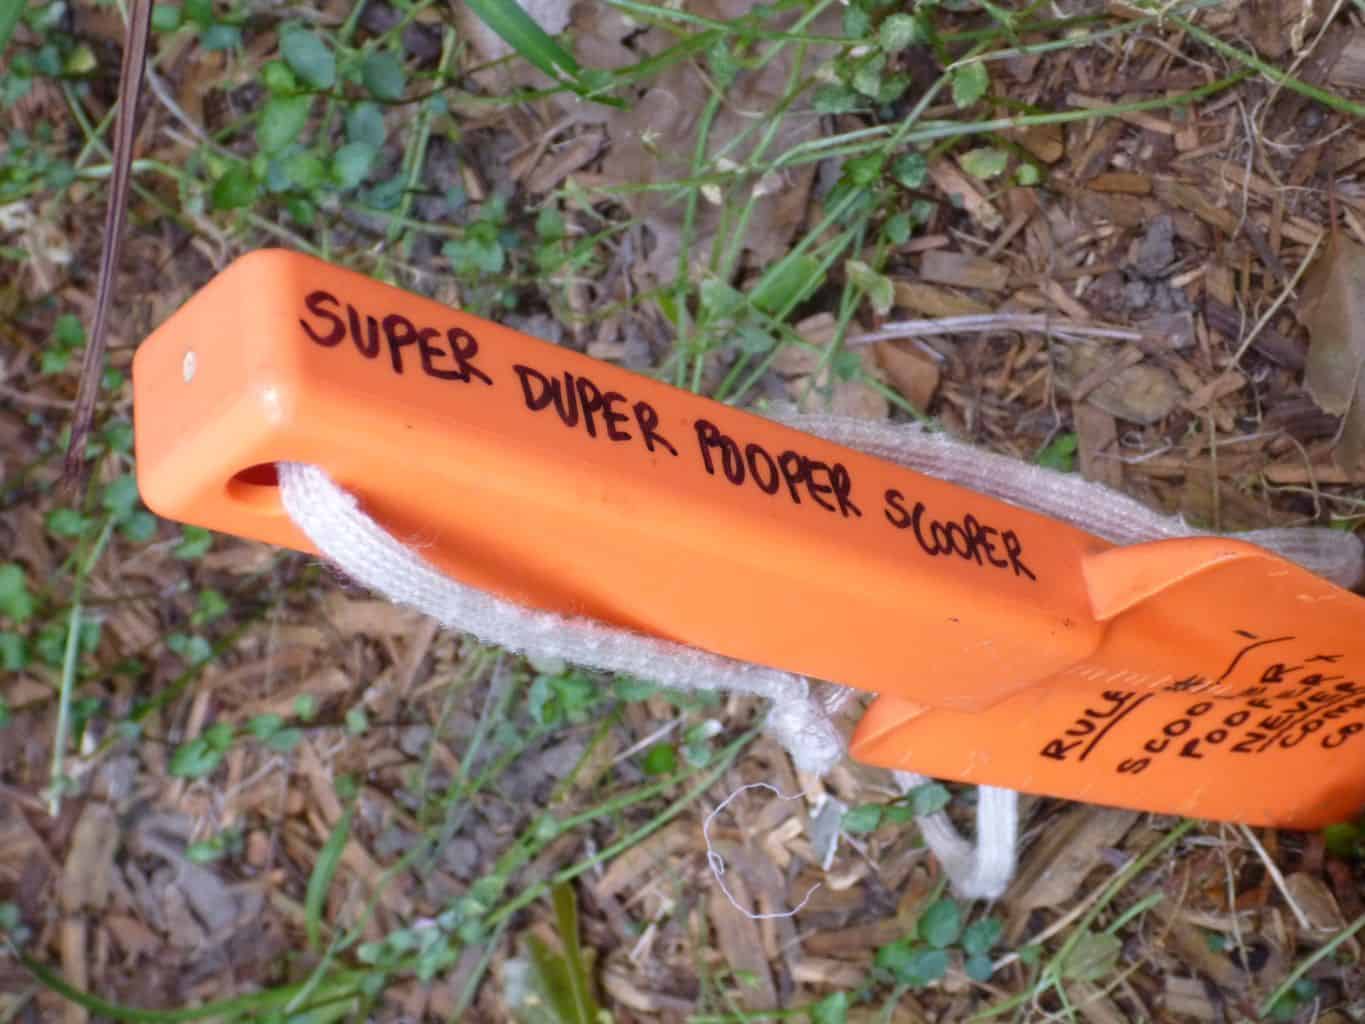 Super Duper Pooper Scooper